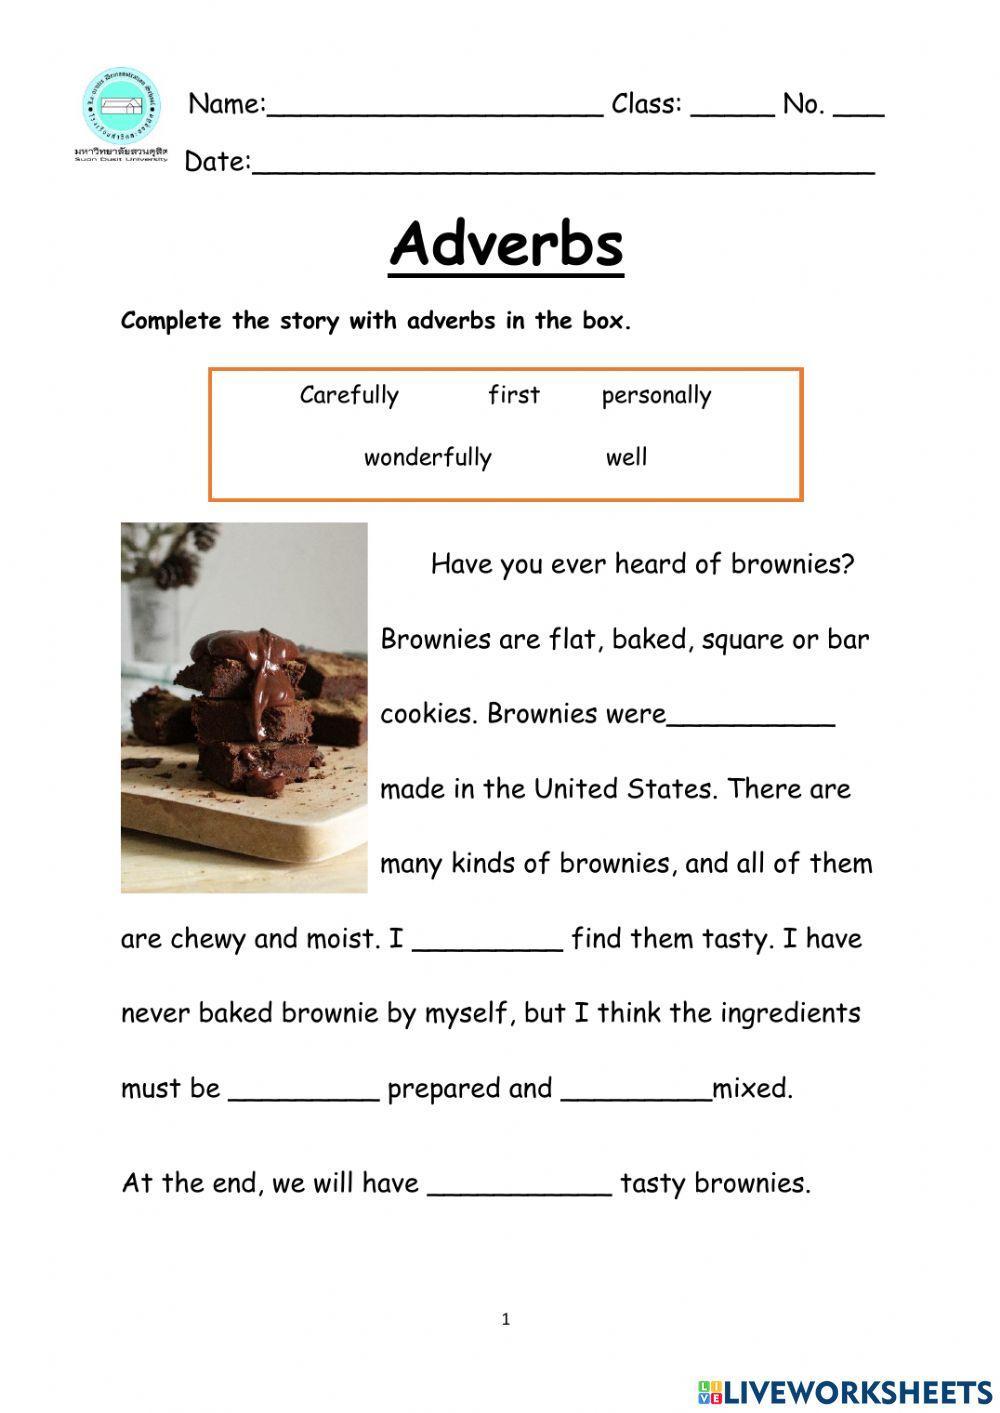 Adverbs reading